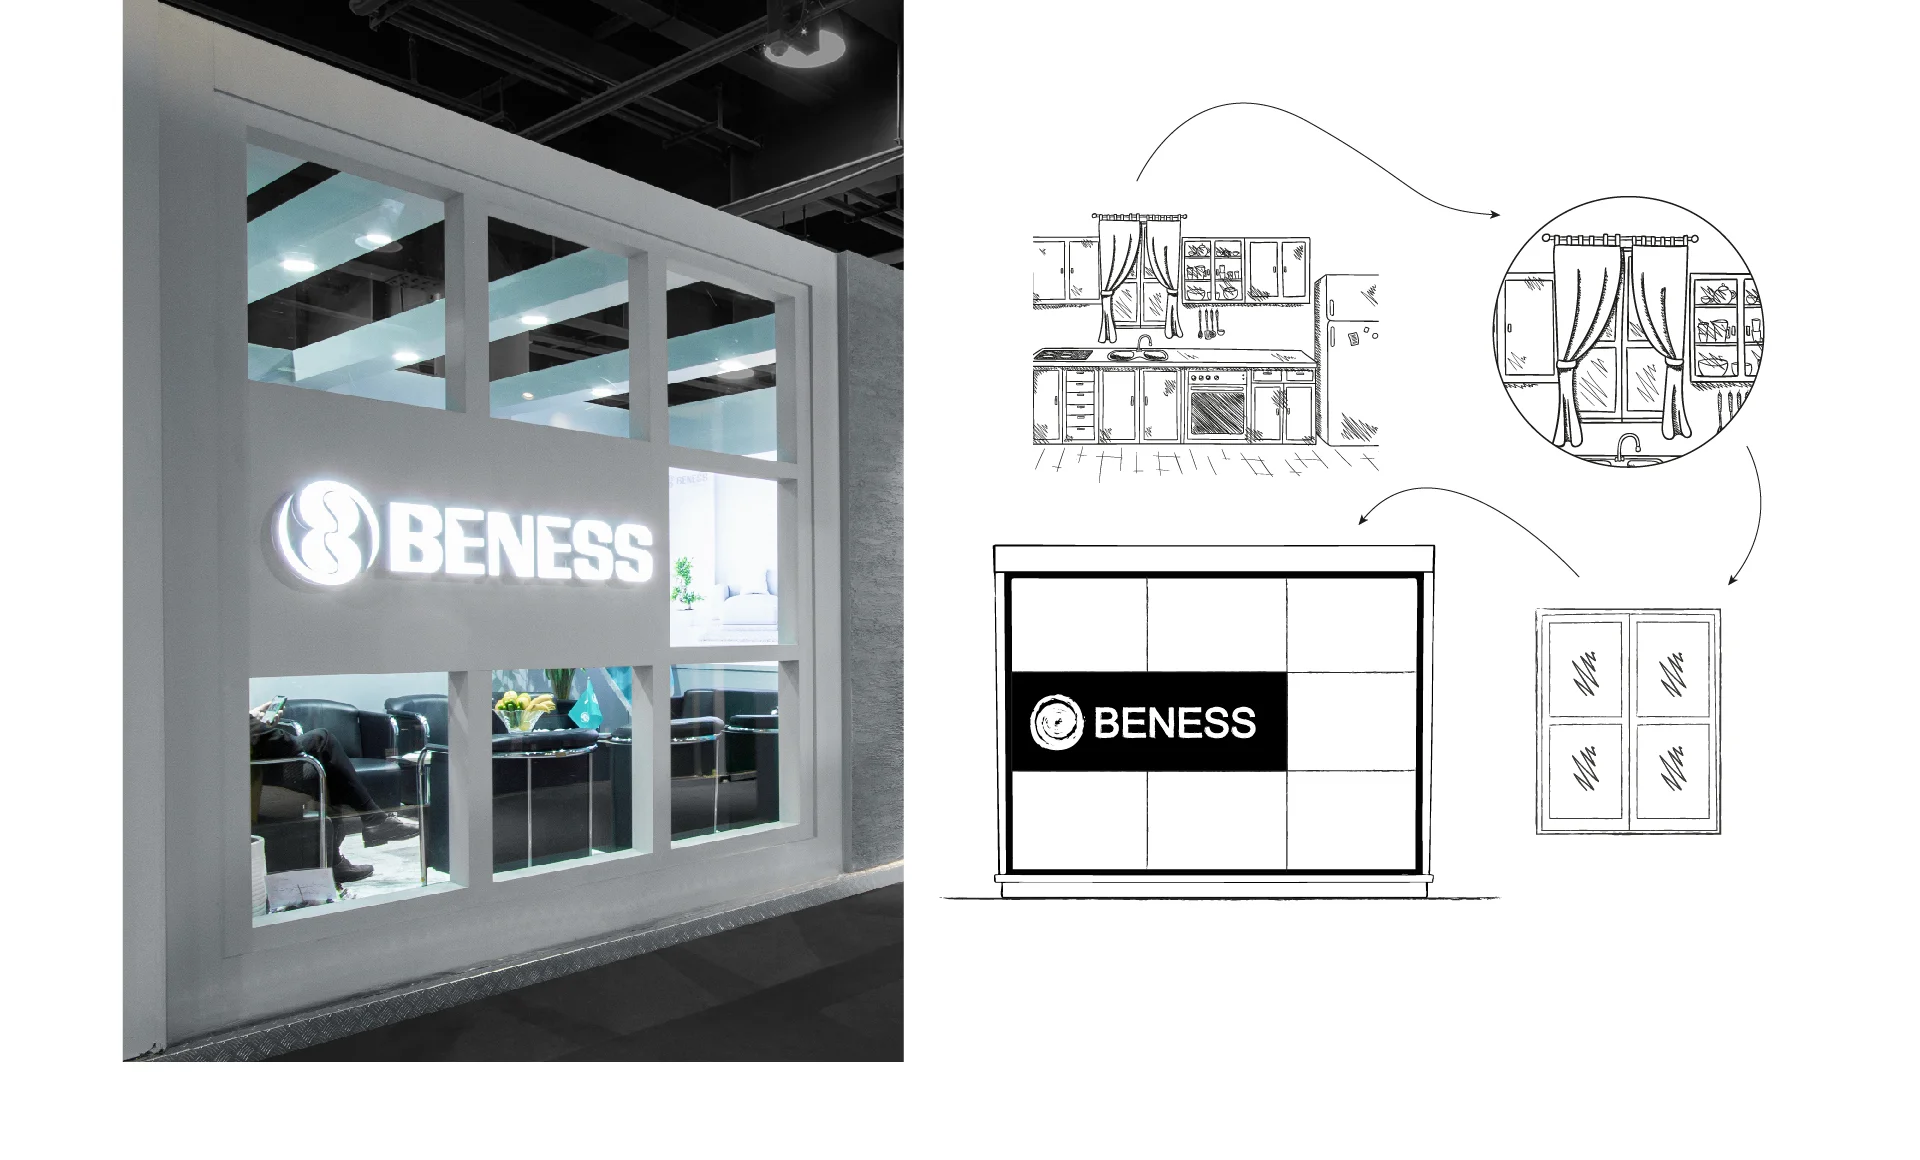   Beness-presentation-04 طراحی غرفه و غرفه سازی نمایشگاهی بنس نمایشگاه لوازم خانگی 1402 